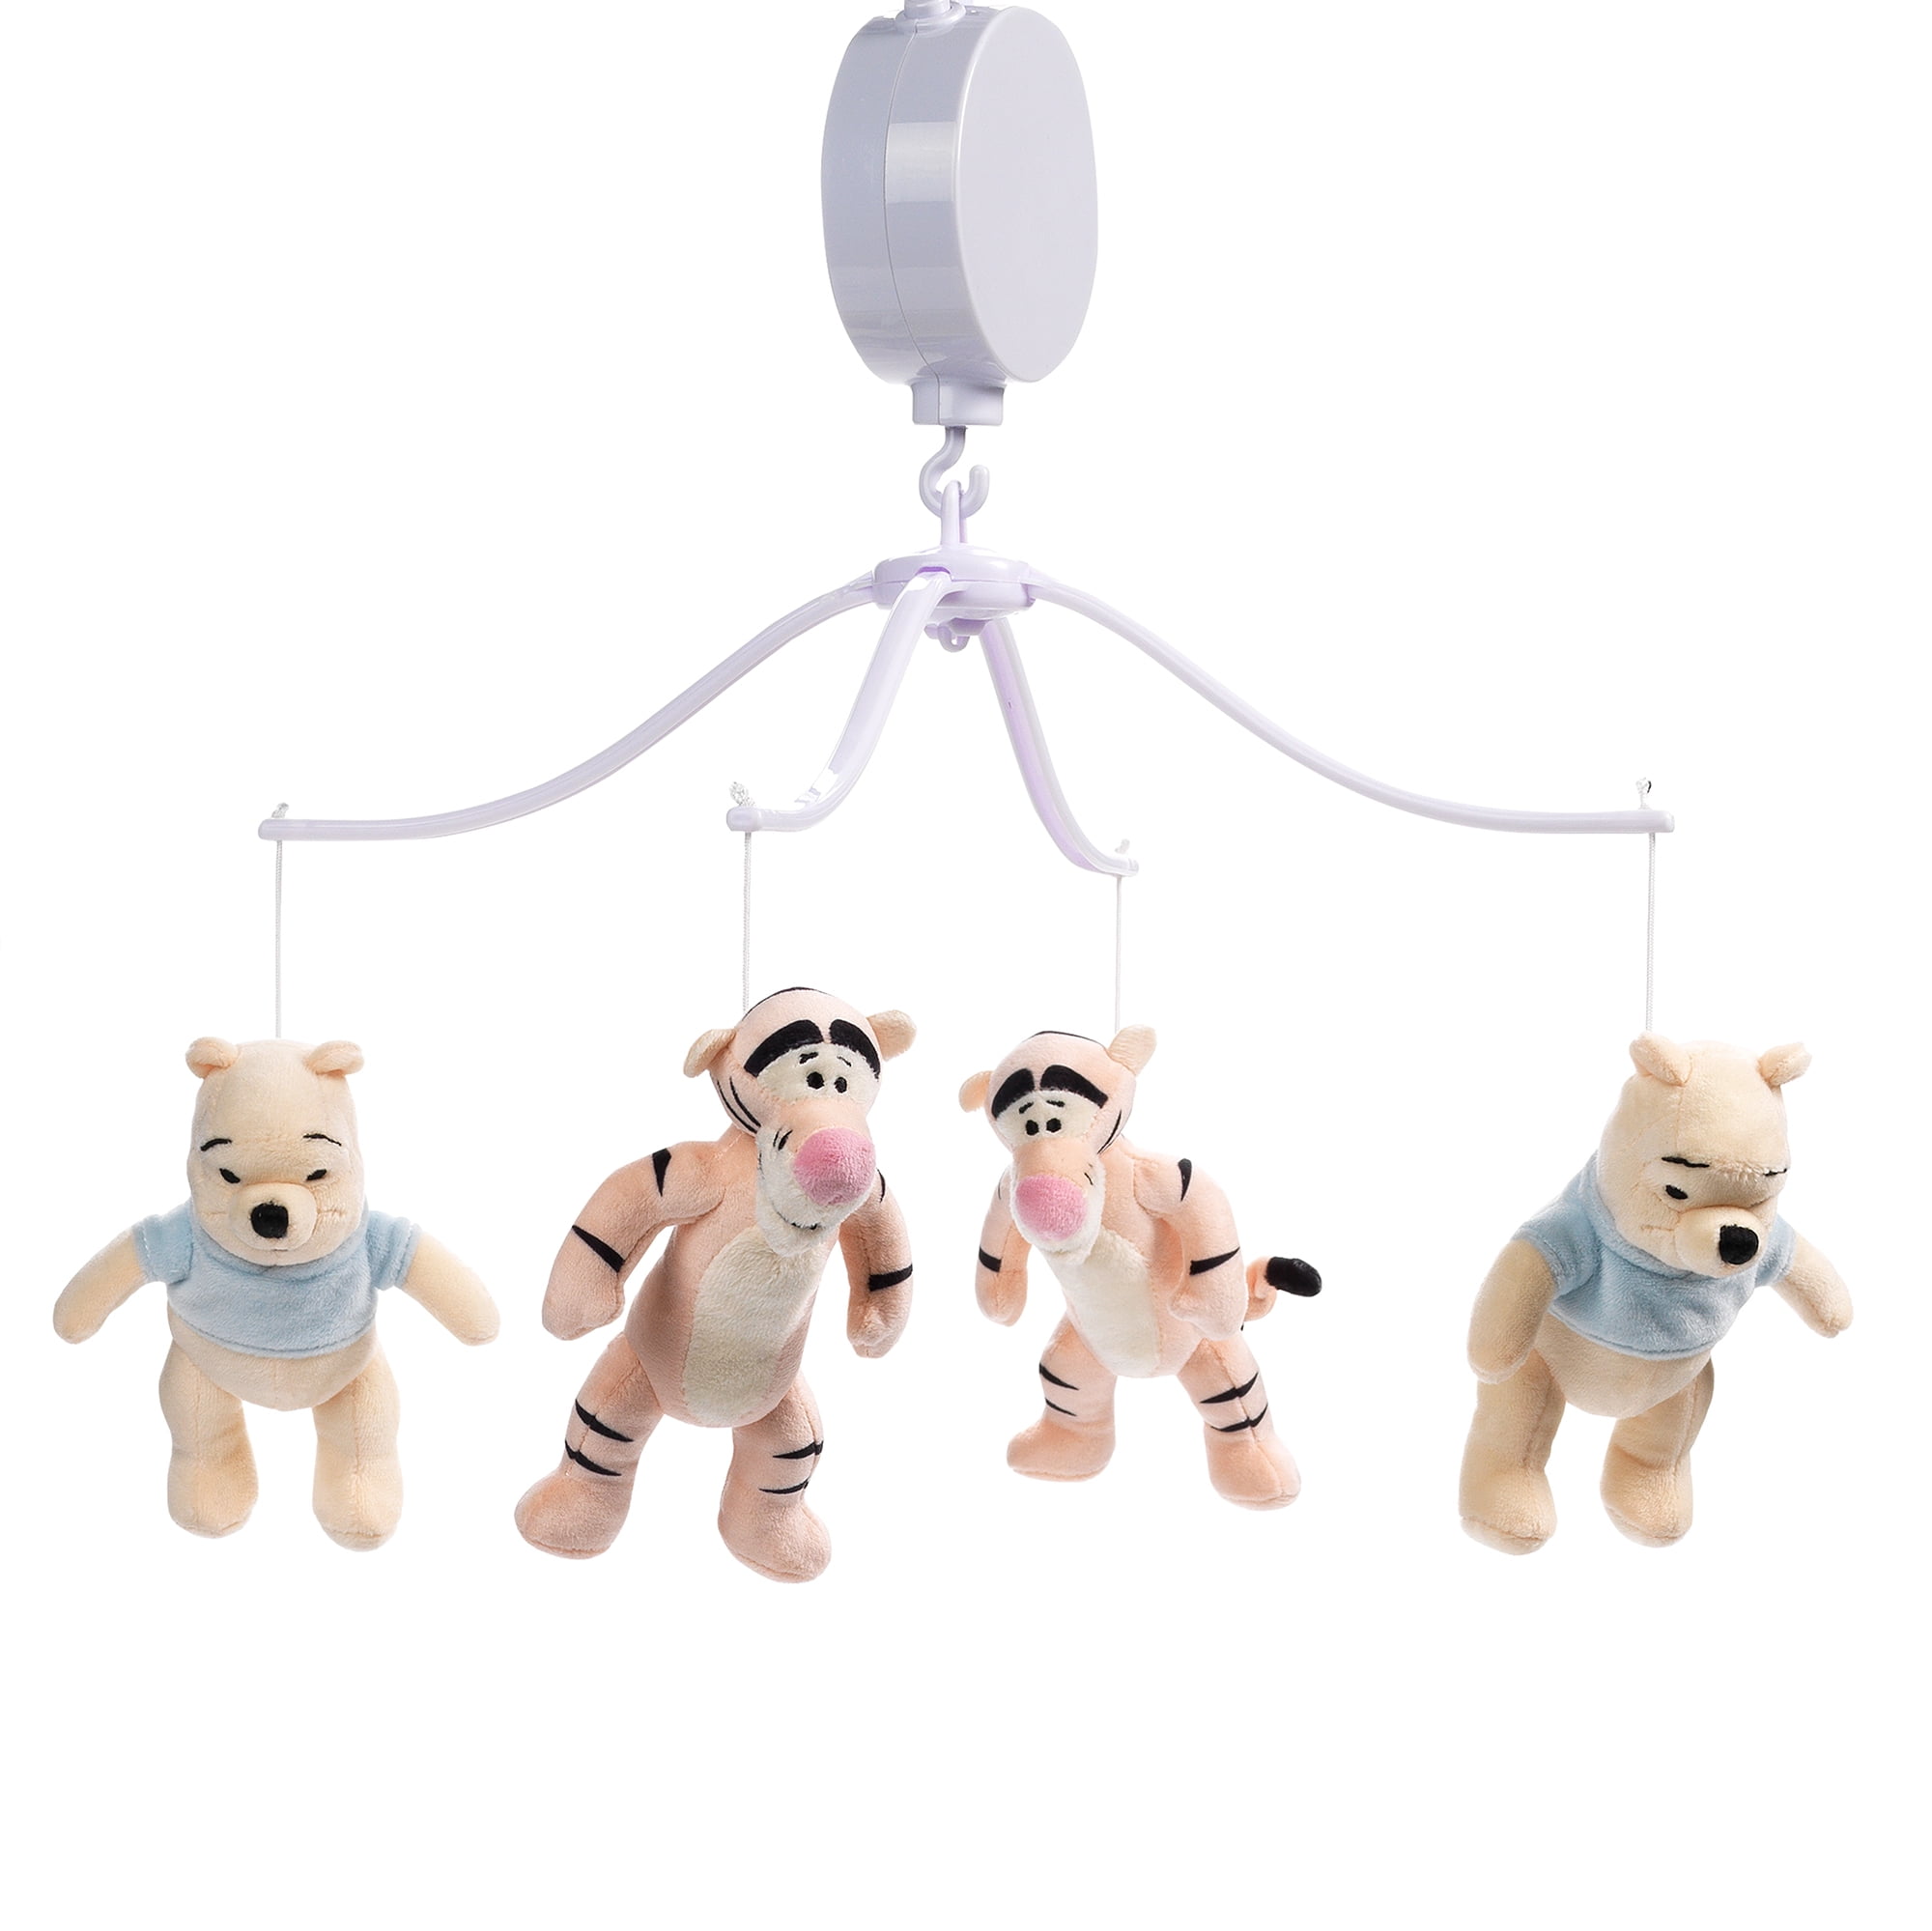 VTech Baby Lil' Critters Soothing Starlight Polar Bear Nursery Projector